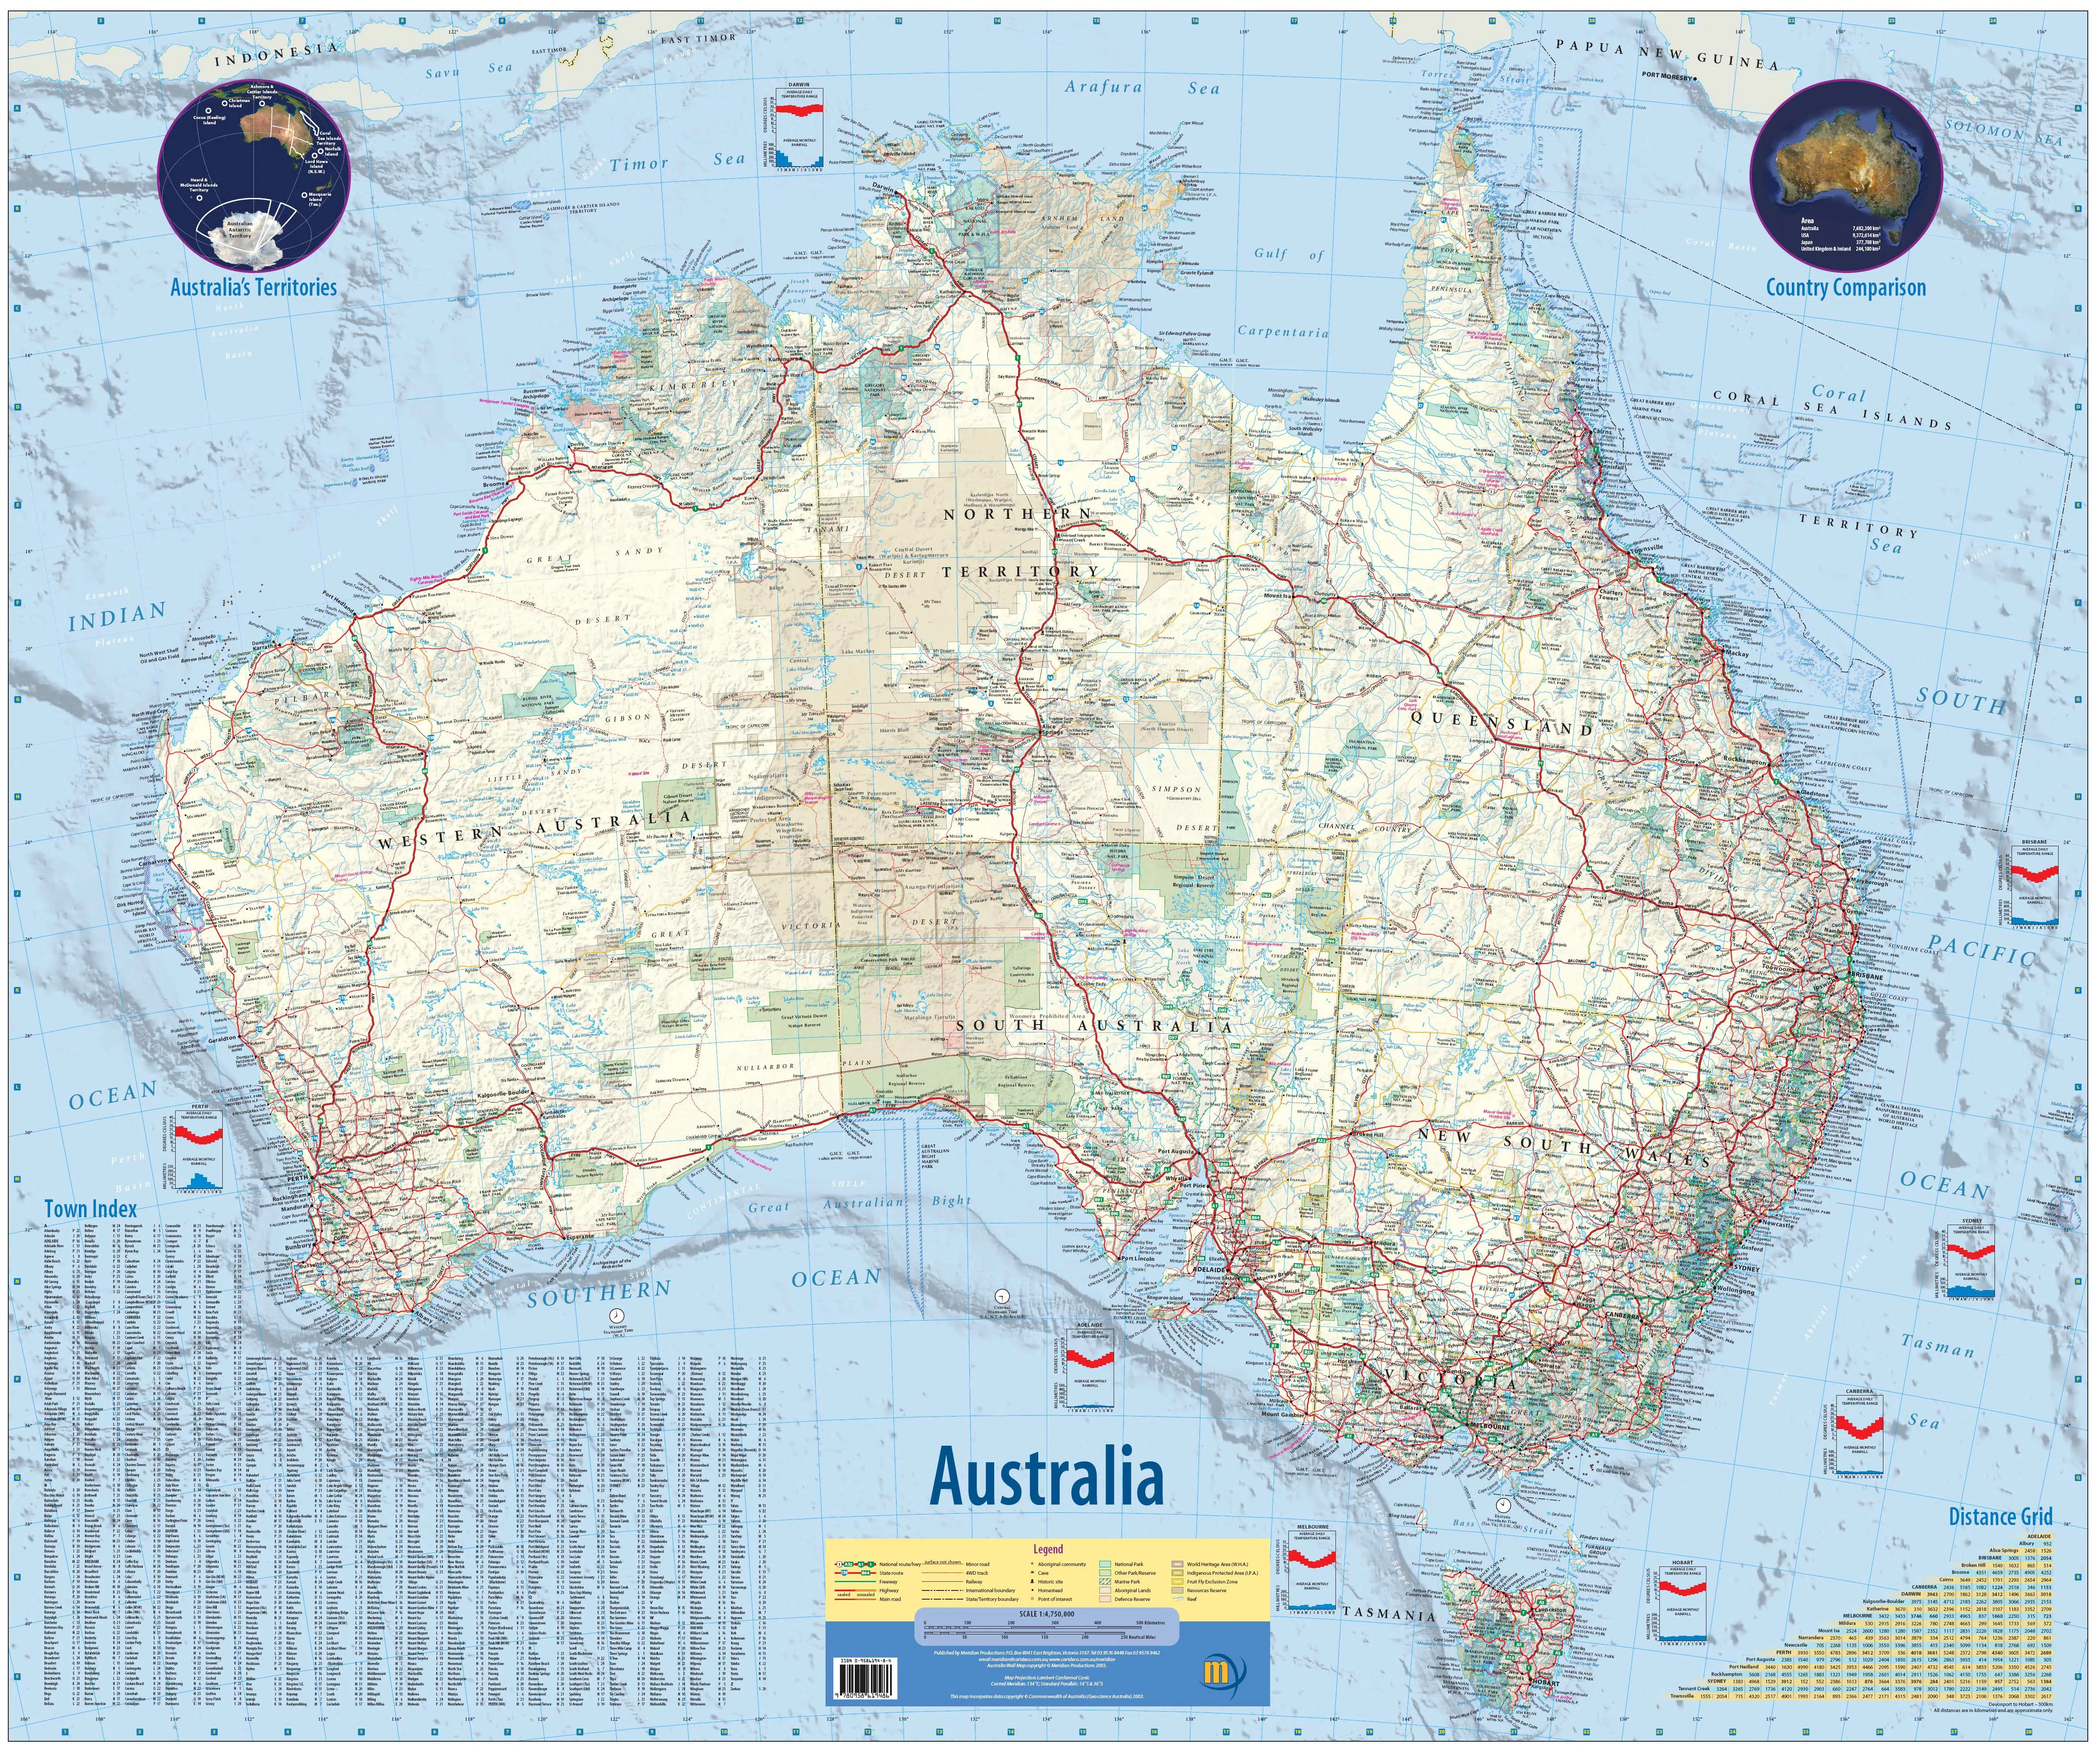 australia-detailed-map-mapsof-net